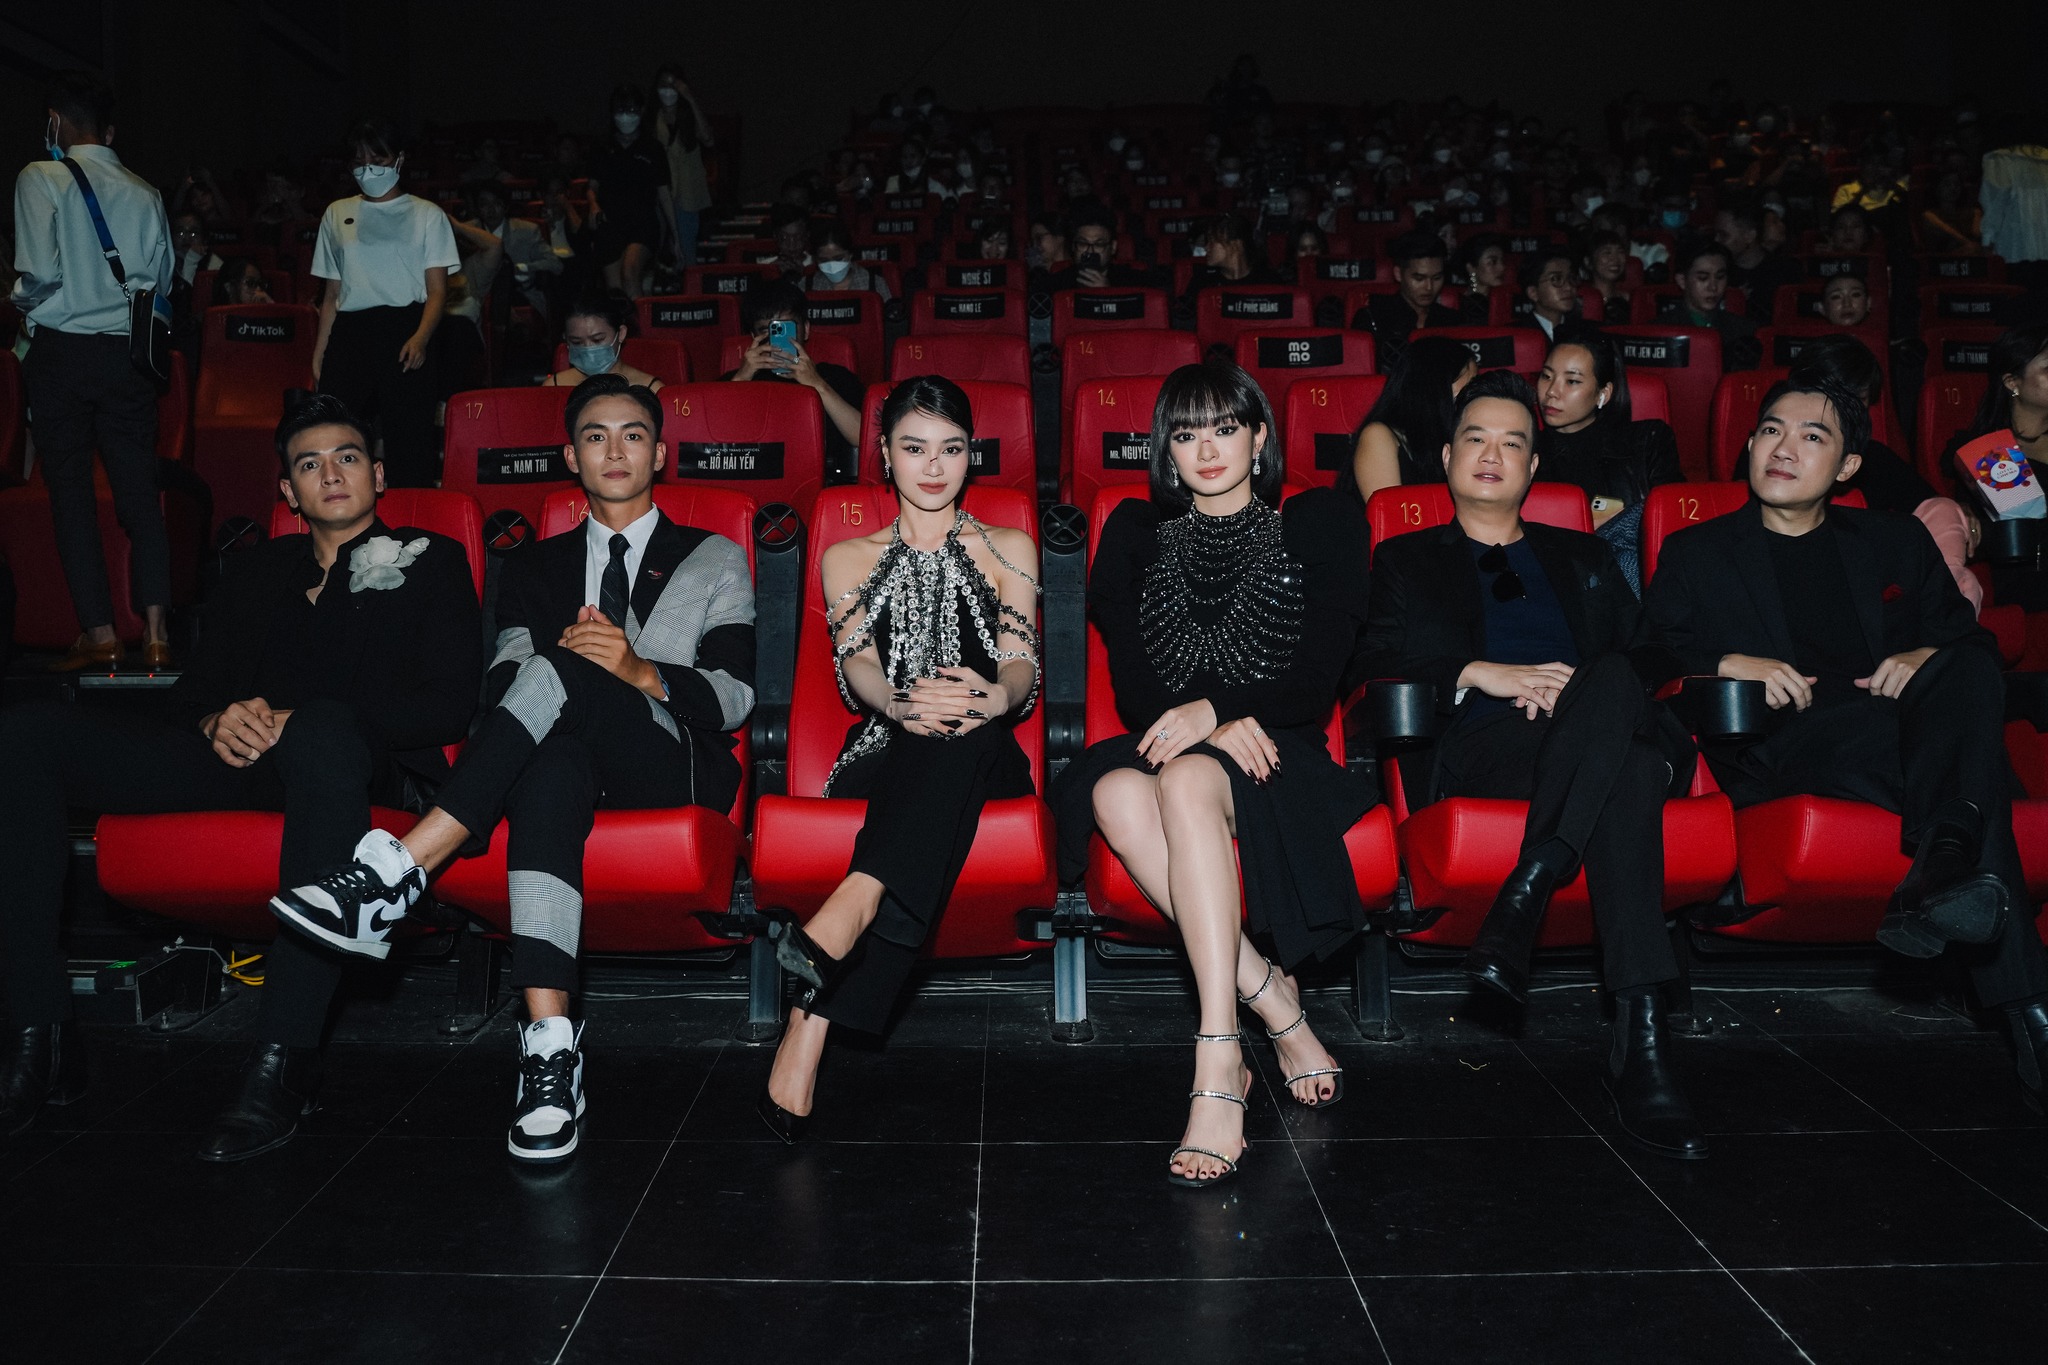 Movie showings should last until no later than 2:00 am: Vietnam cinema watchdog